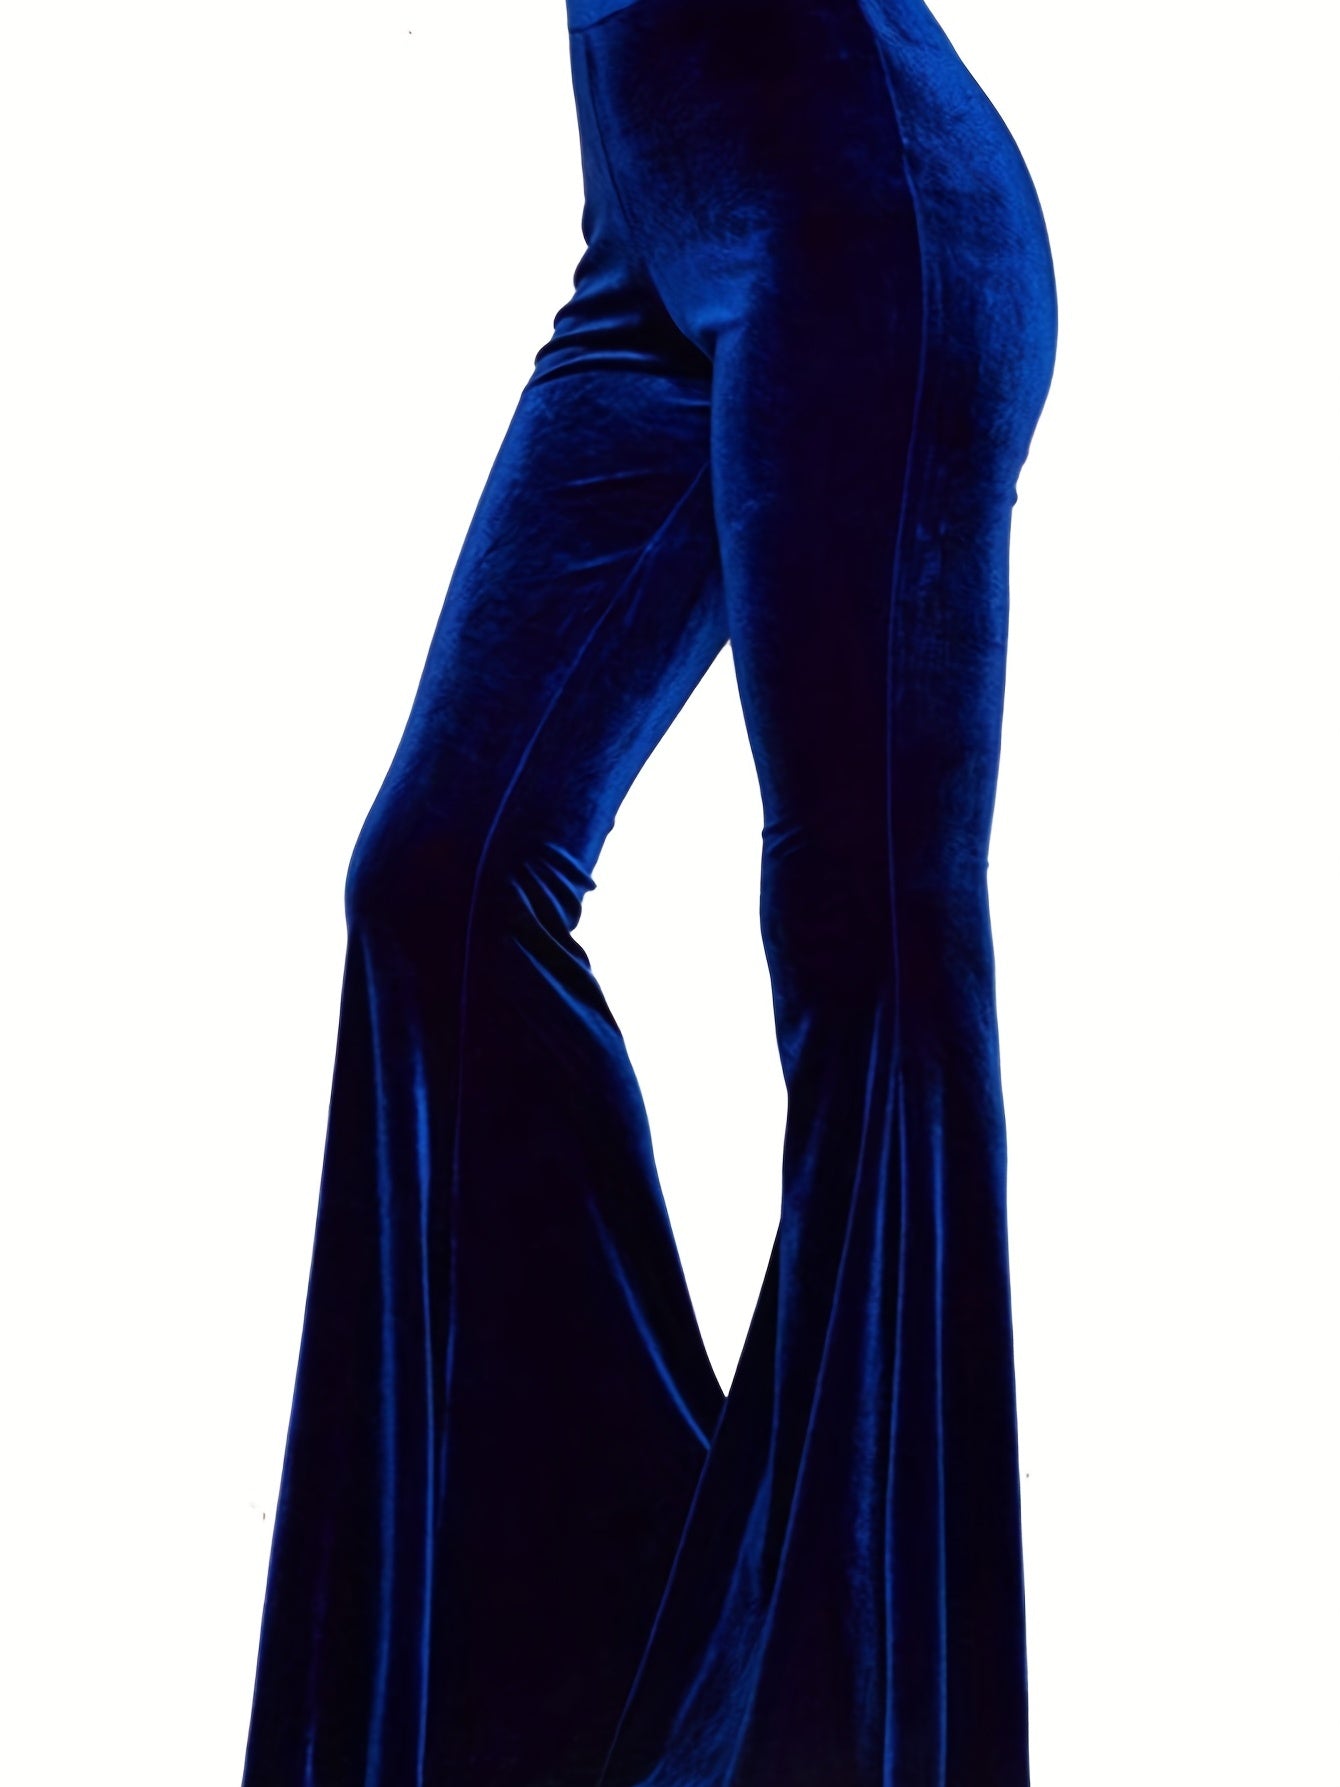 Antmvs Solid Velvet Flare Leg Pants, Casual Elastic Slim Pants For Spring & Fall, Women's Clothing